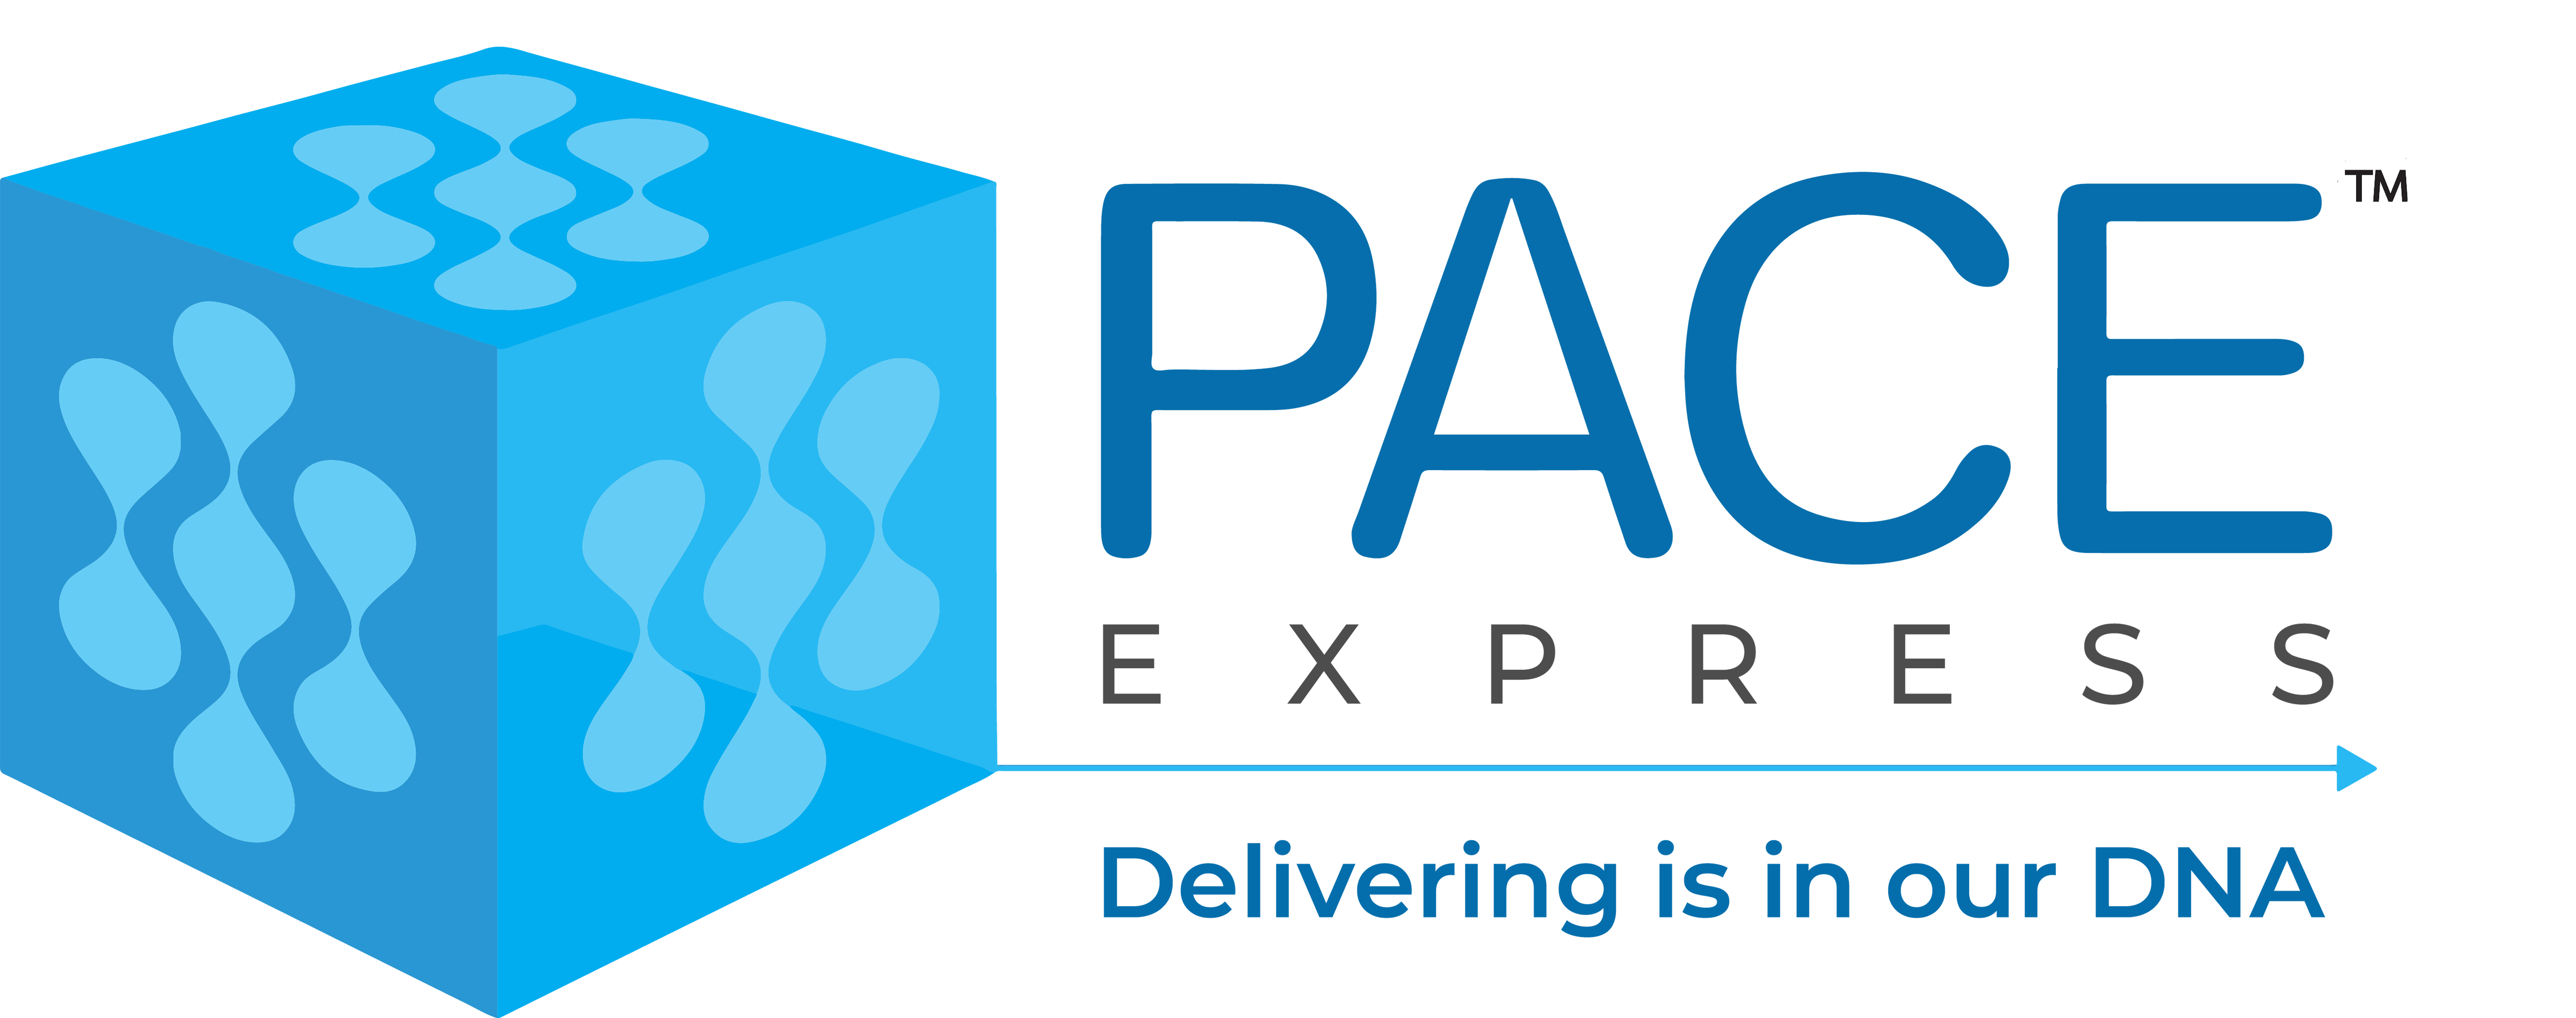 (c) Paceexp.com